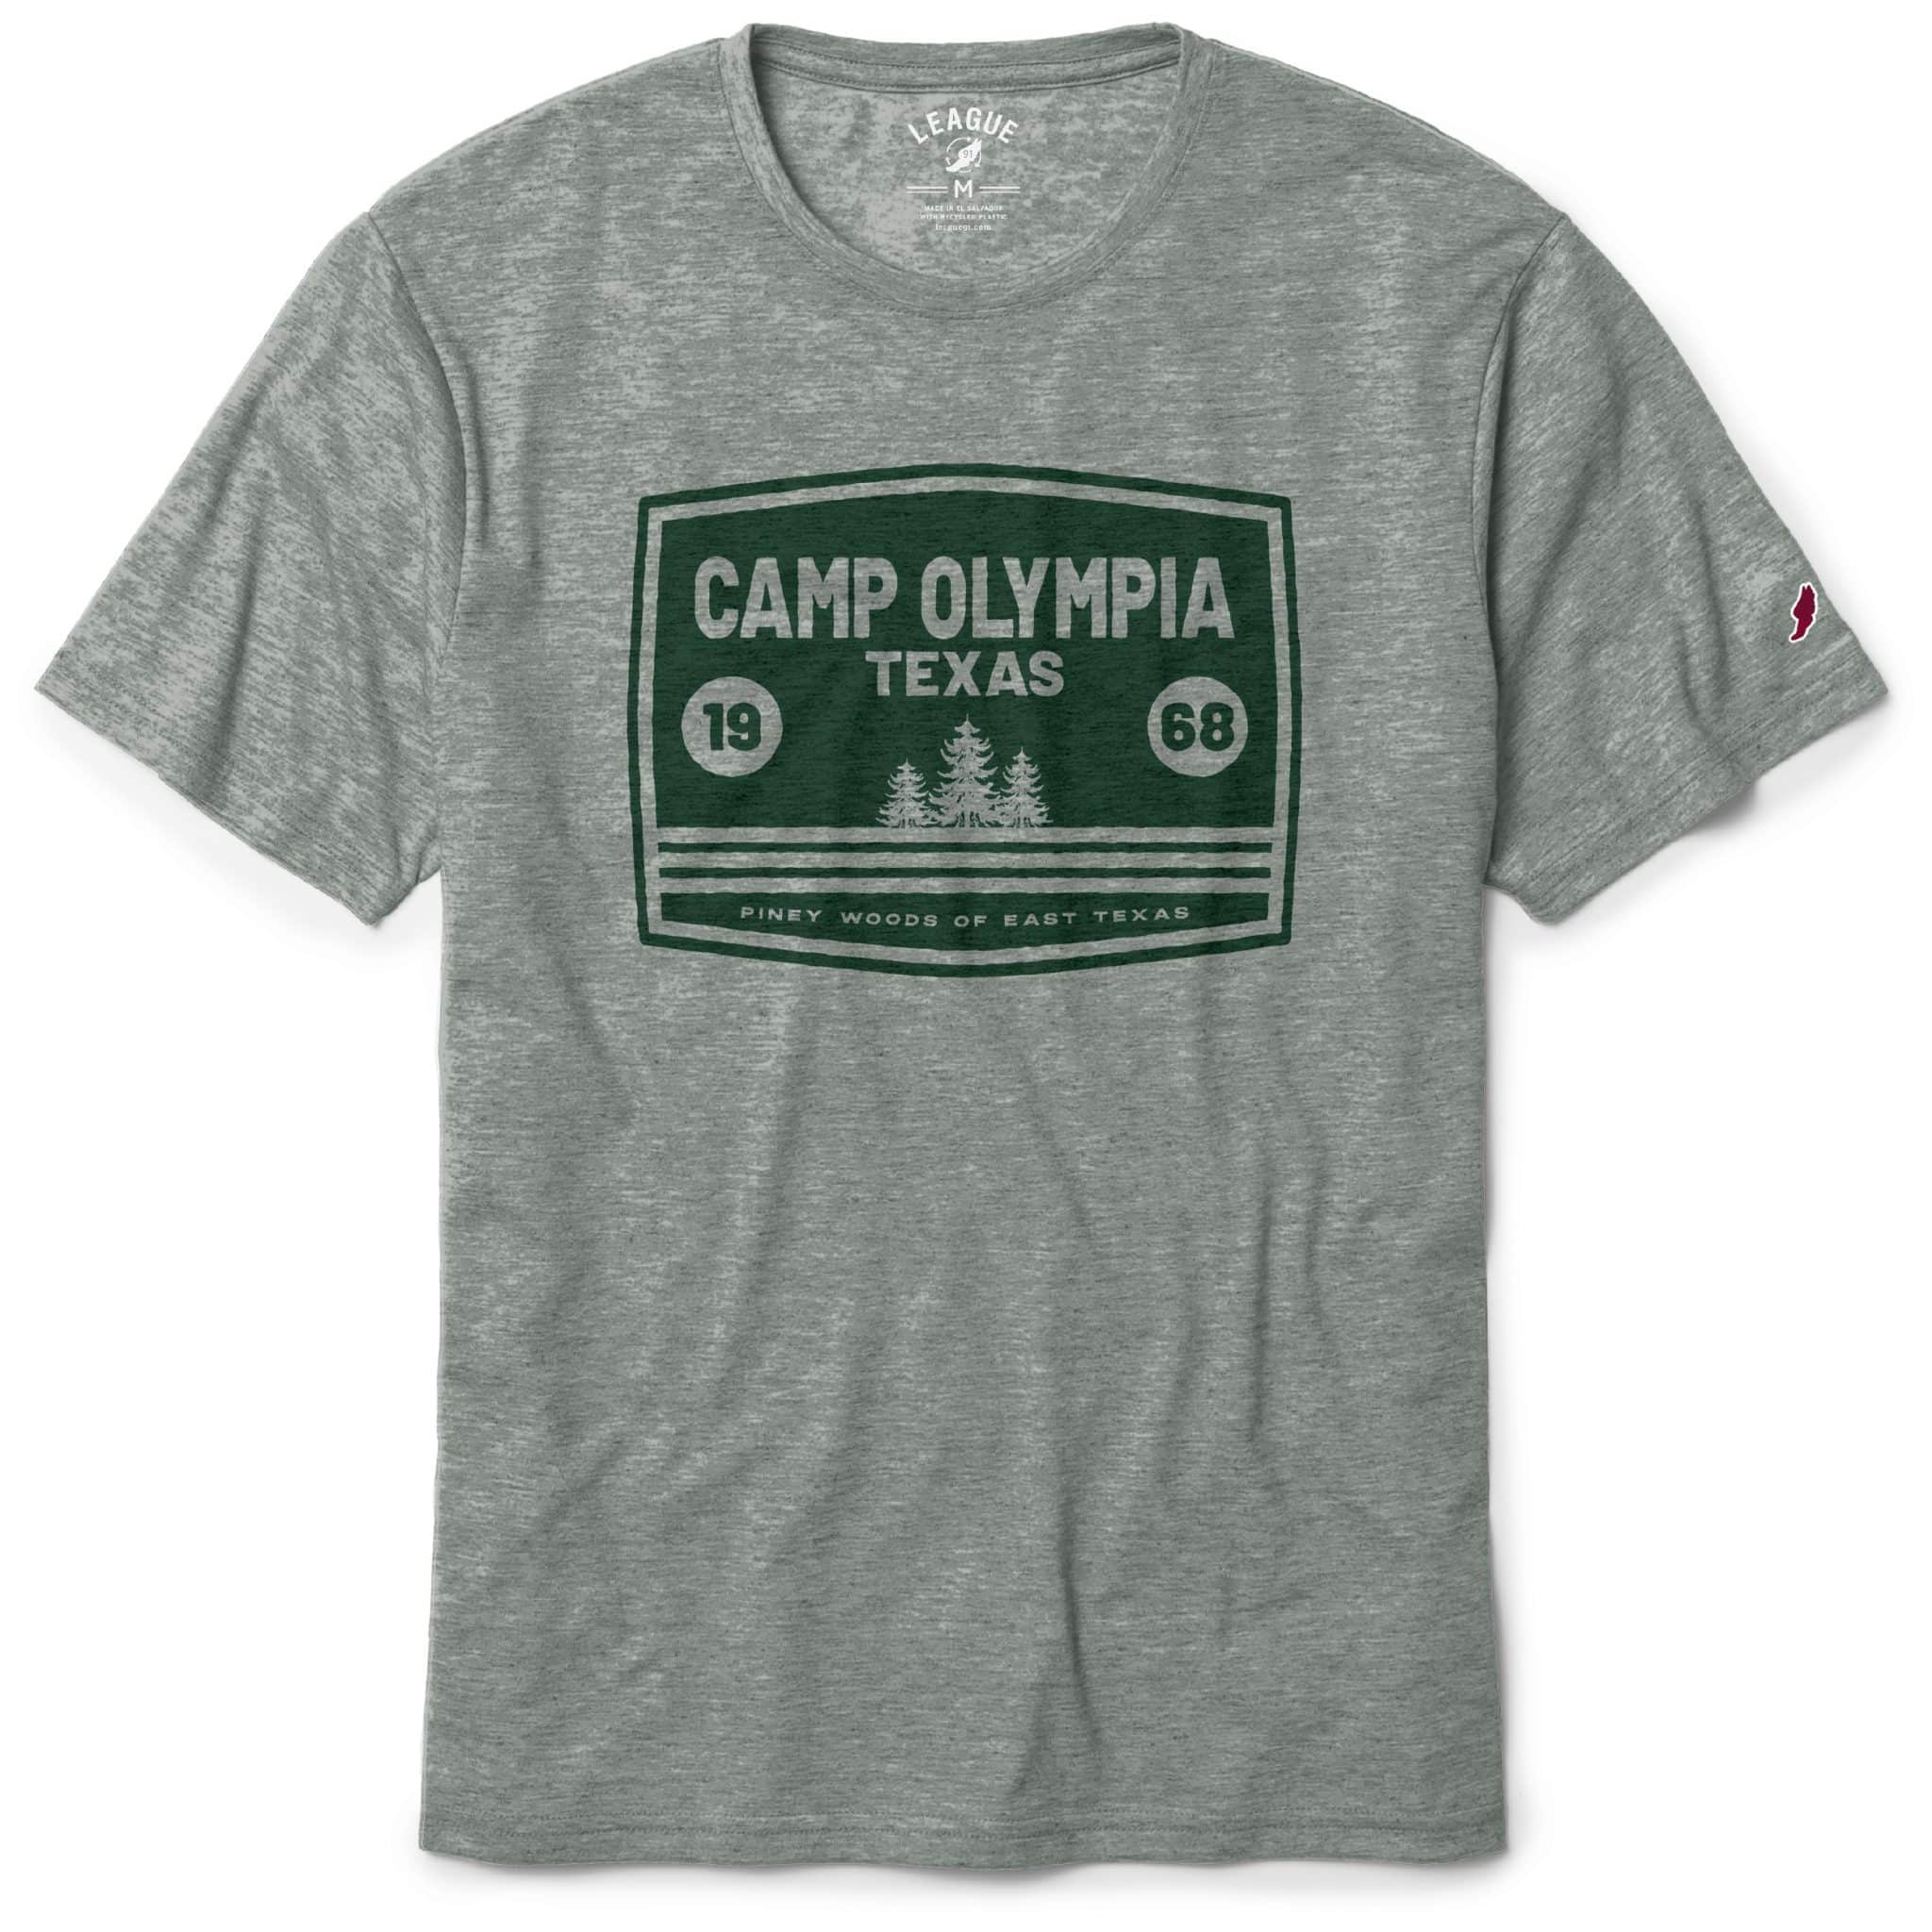 Camp Olympia Texas 1968 T-shirt